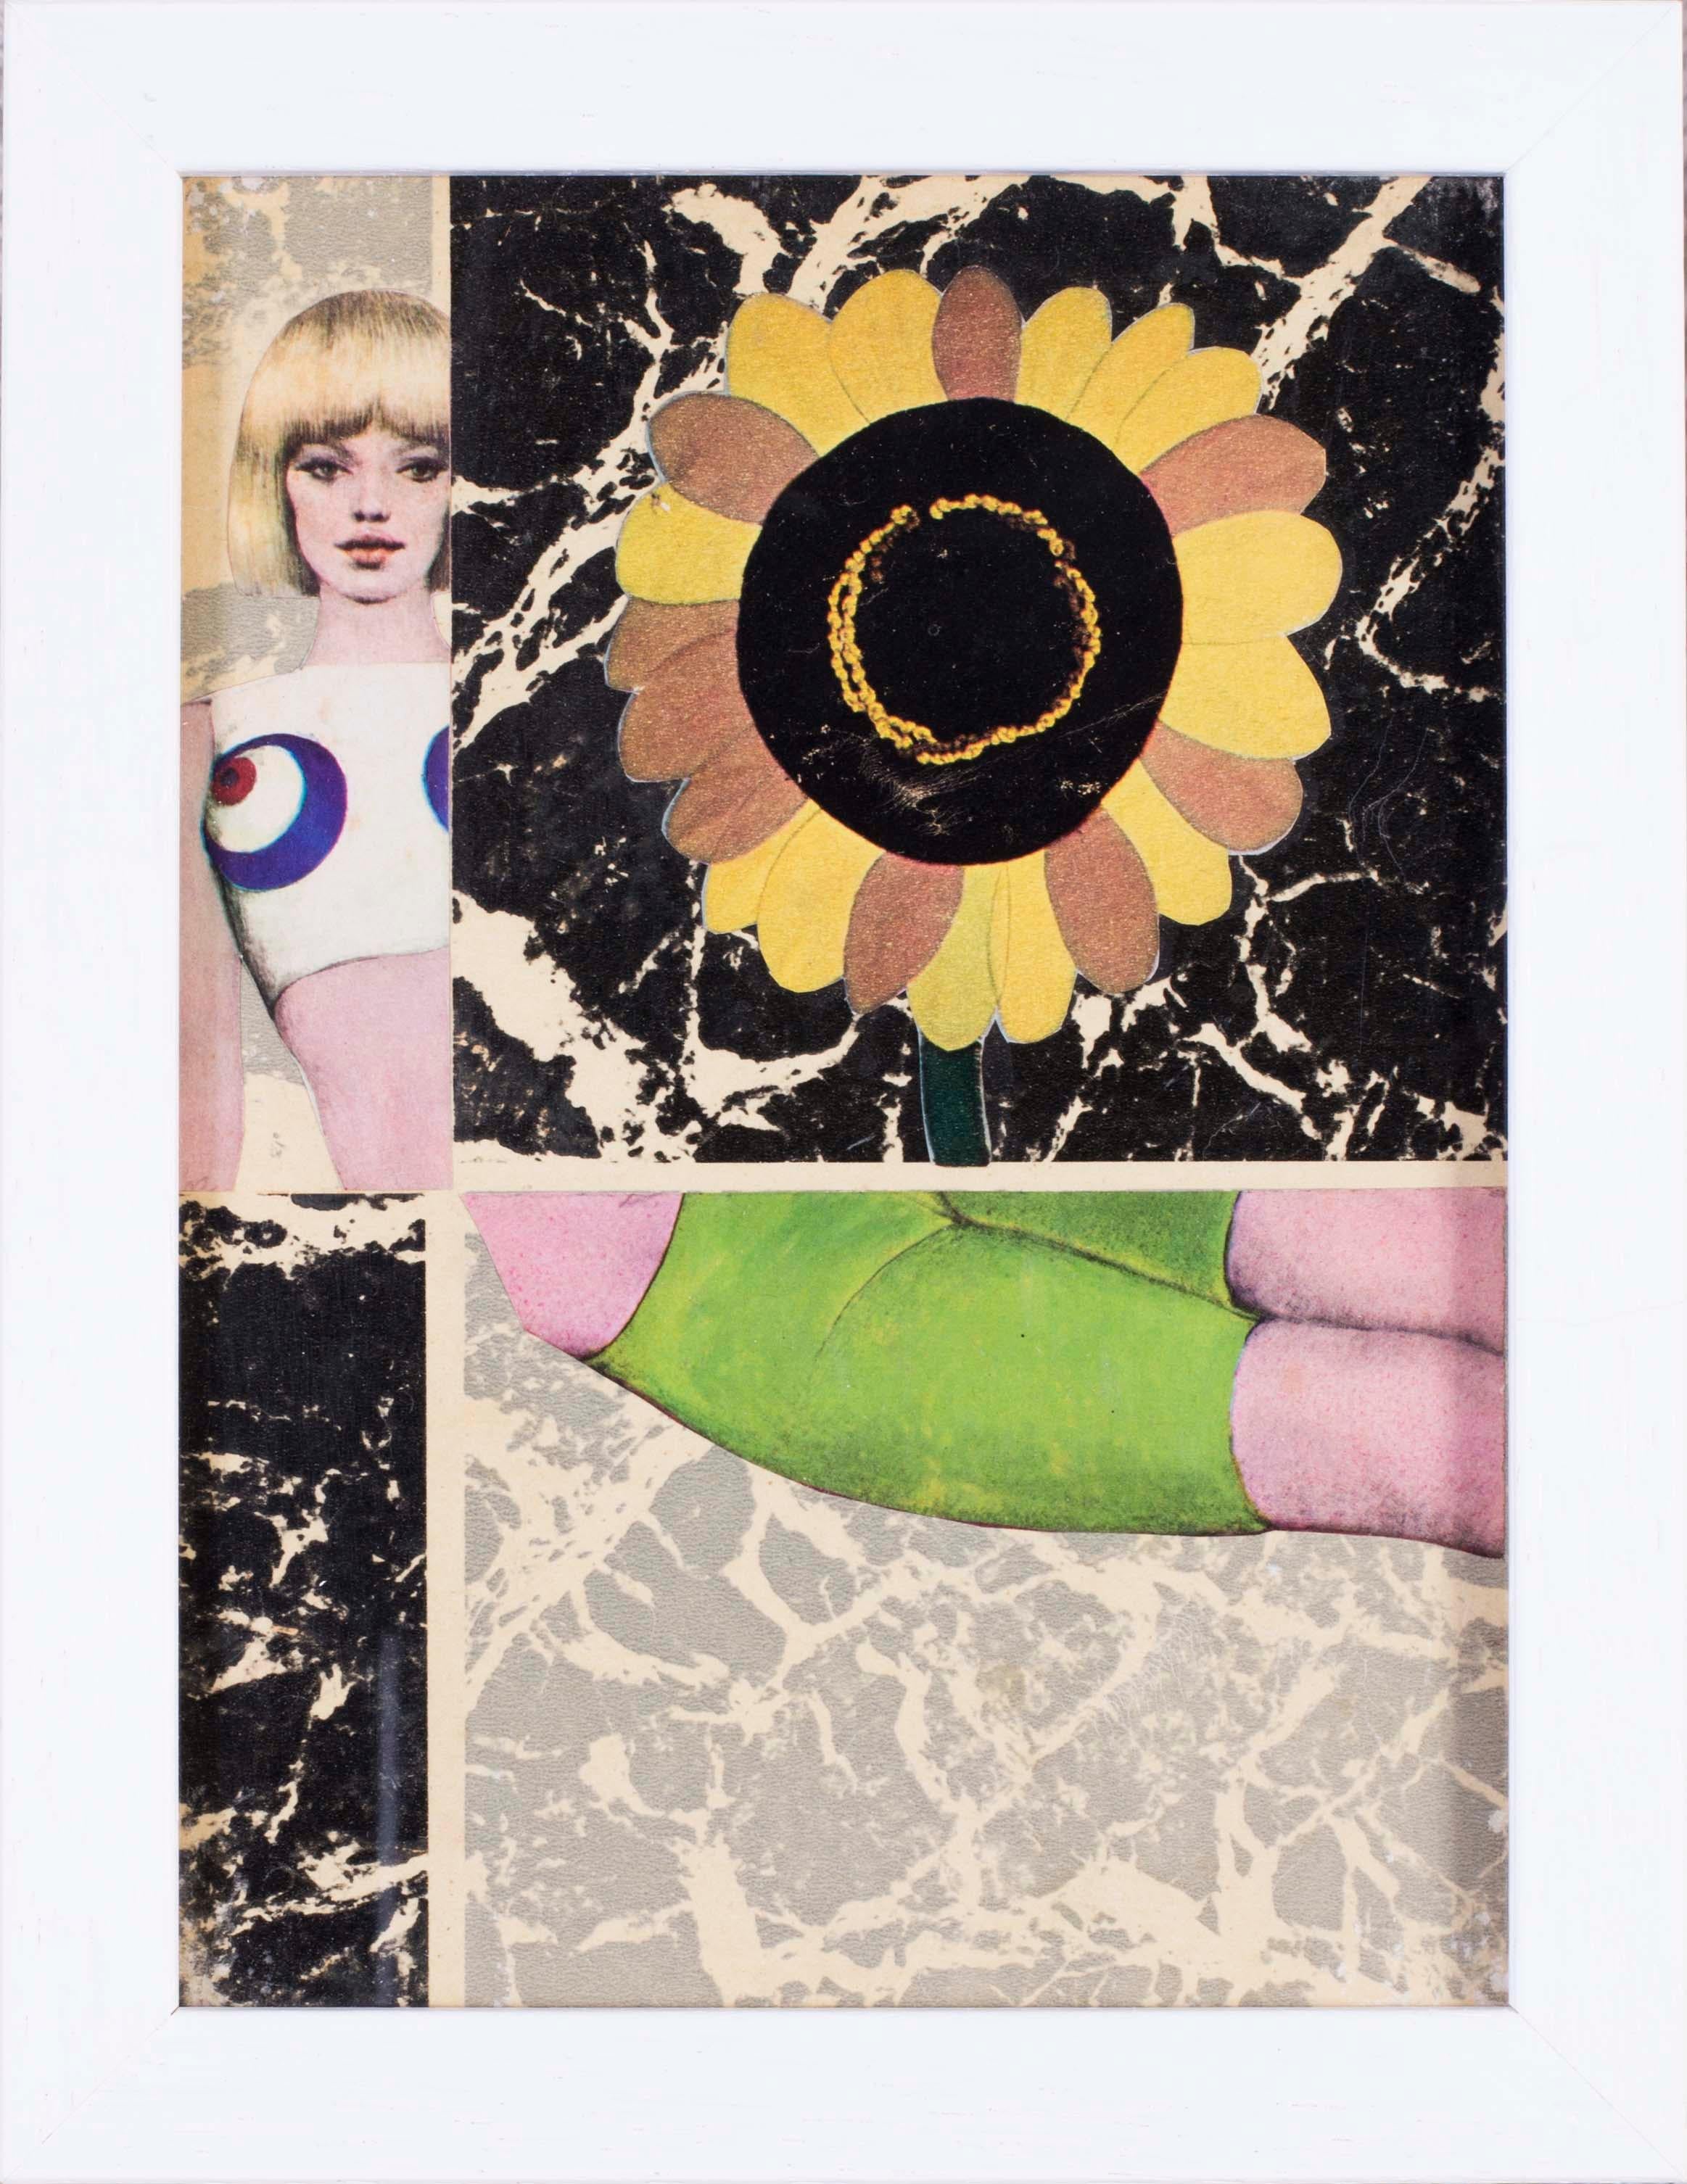 French, 1960s Pop Art Collage 'sunflower', 1966 - Mixed Media Art by Pierre Jourda